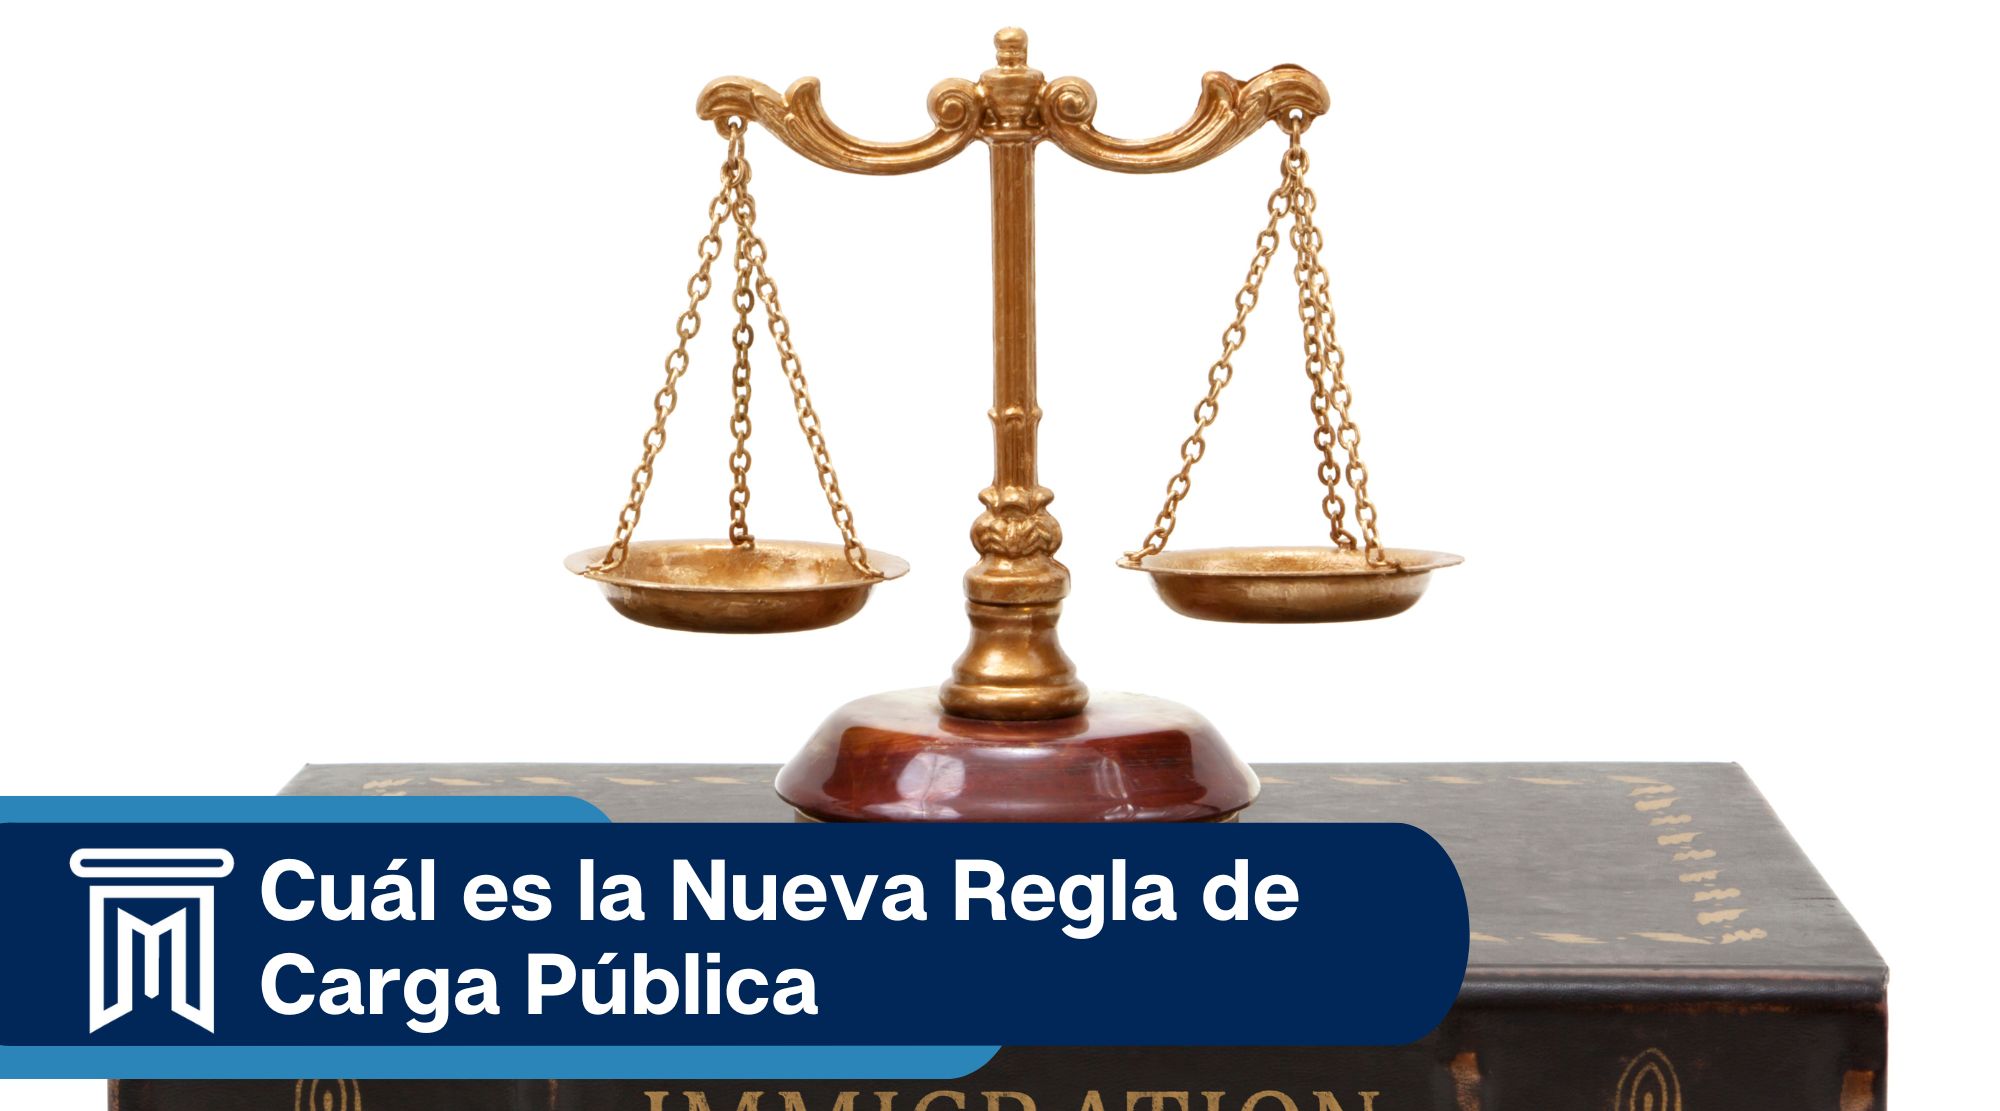 J. Molina Law Firm